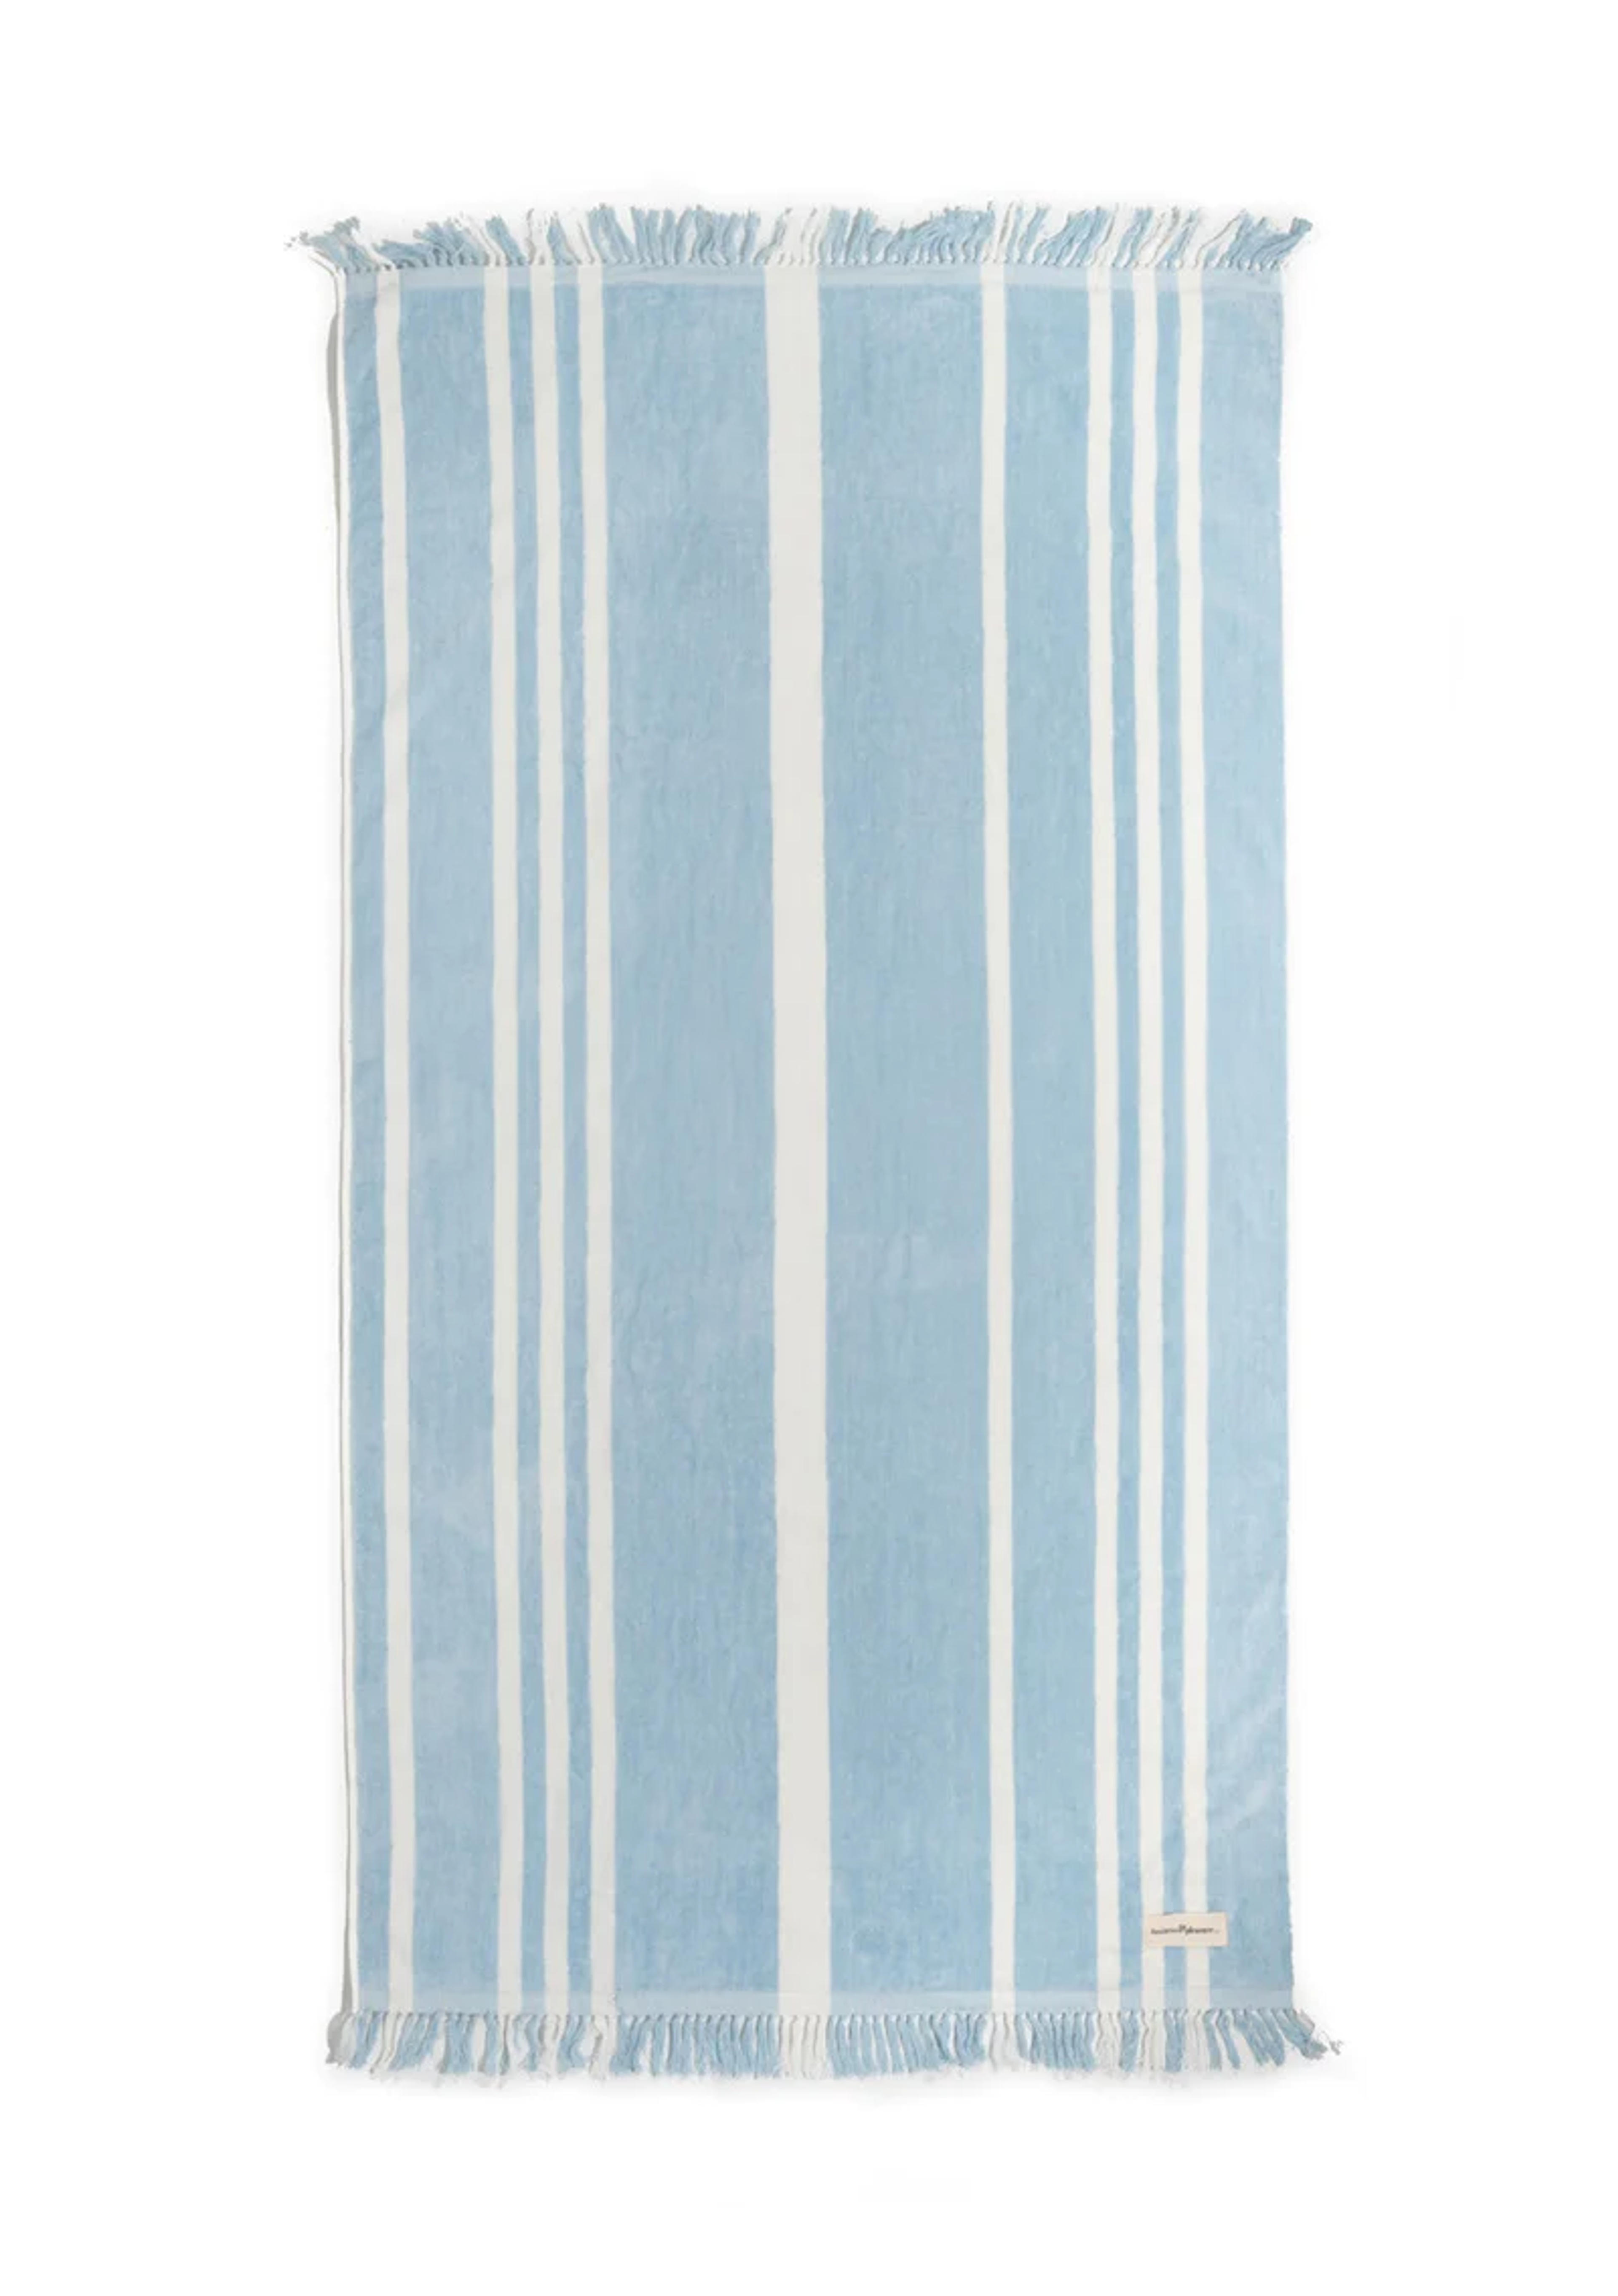 The Beach Towel - Vintage Blue Stripe